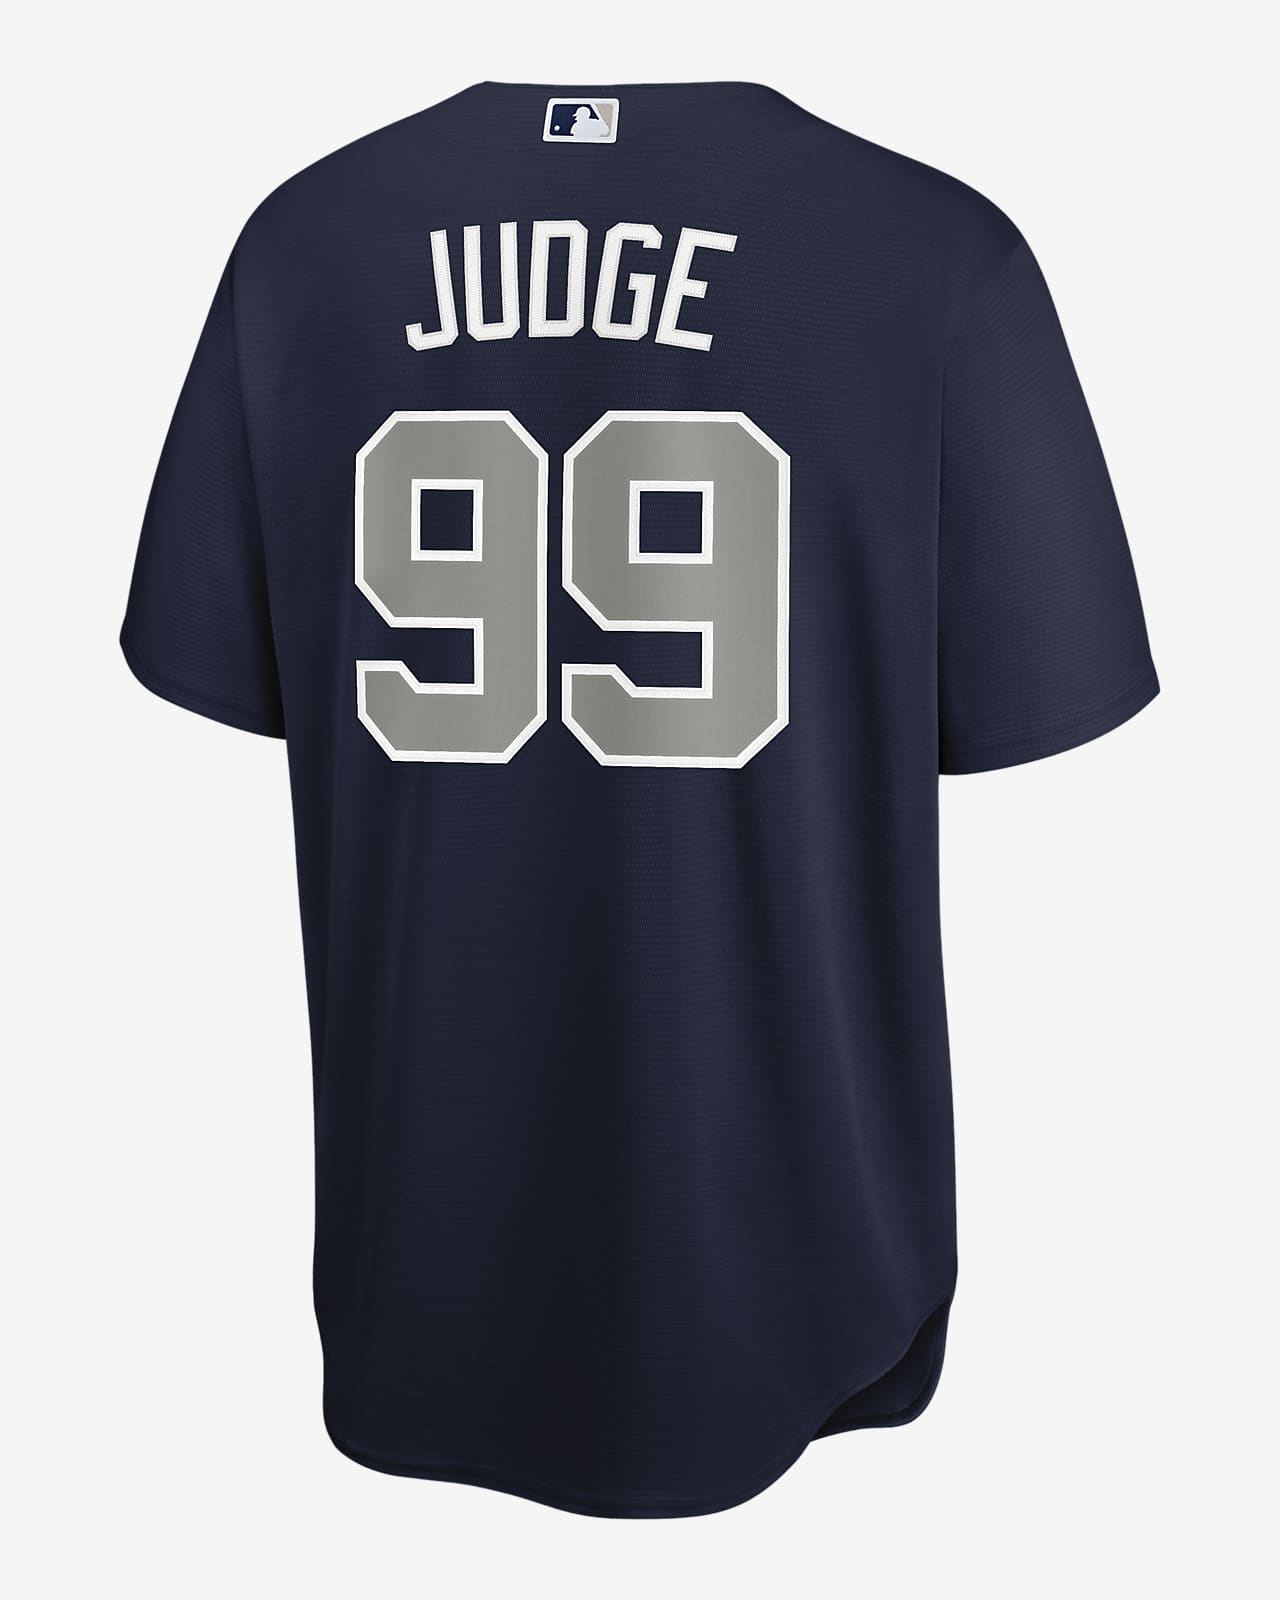 aaron judge jersey size